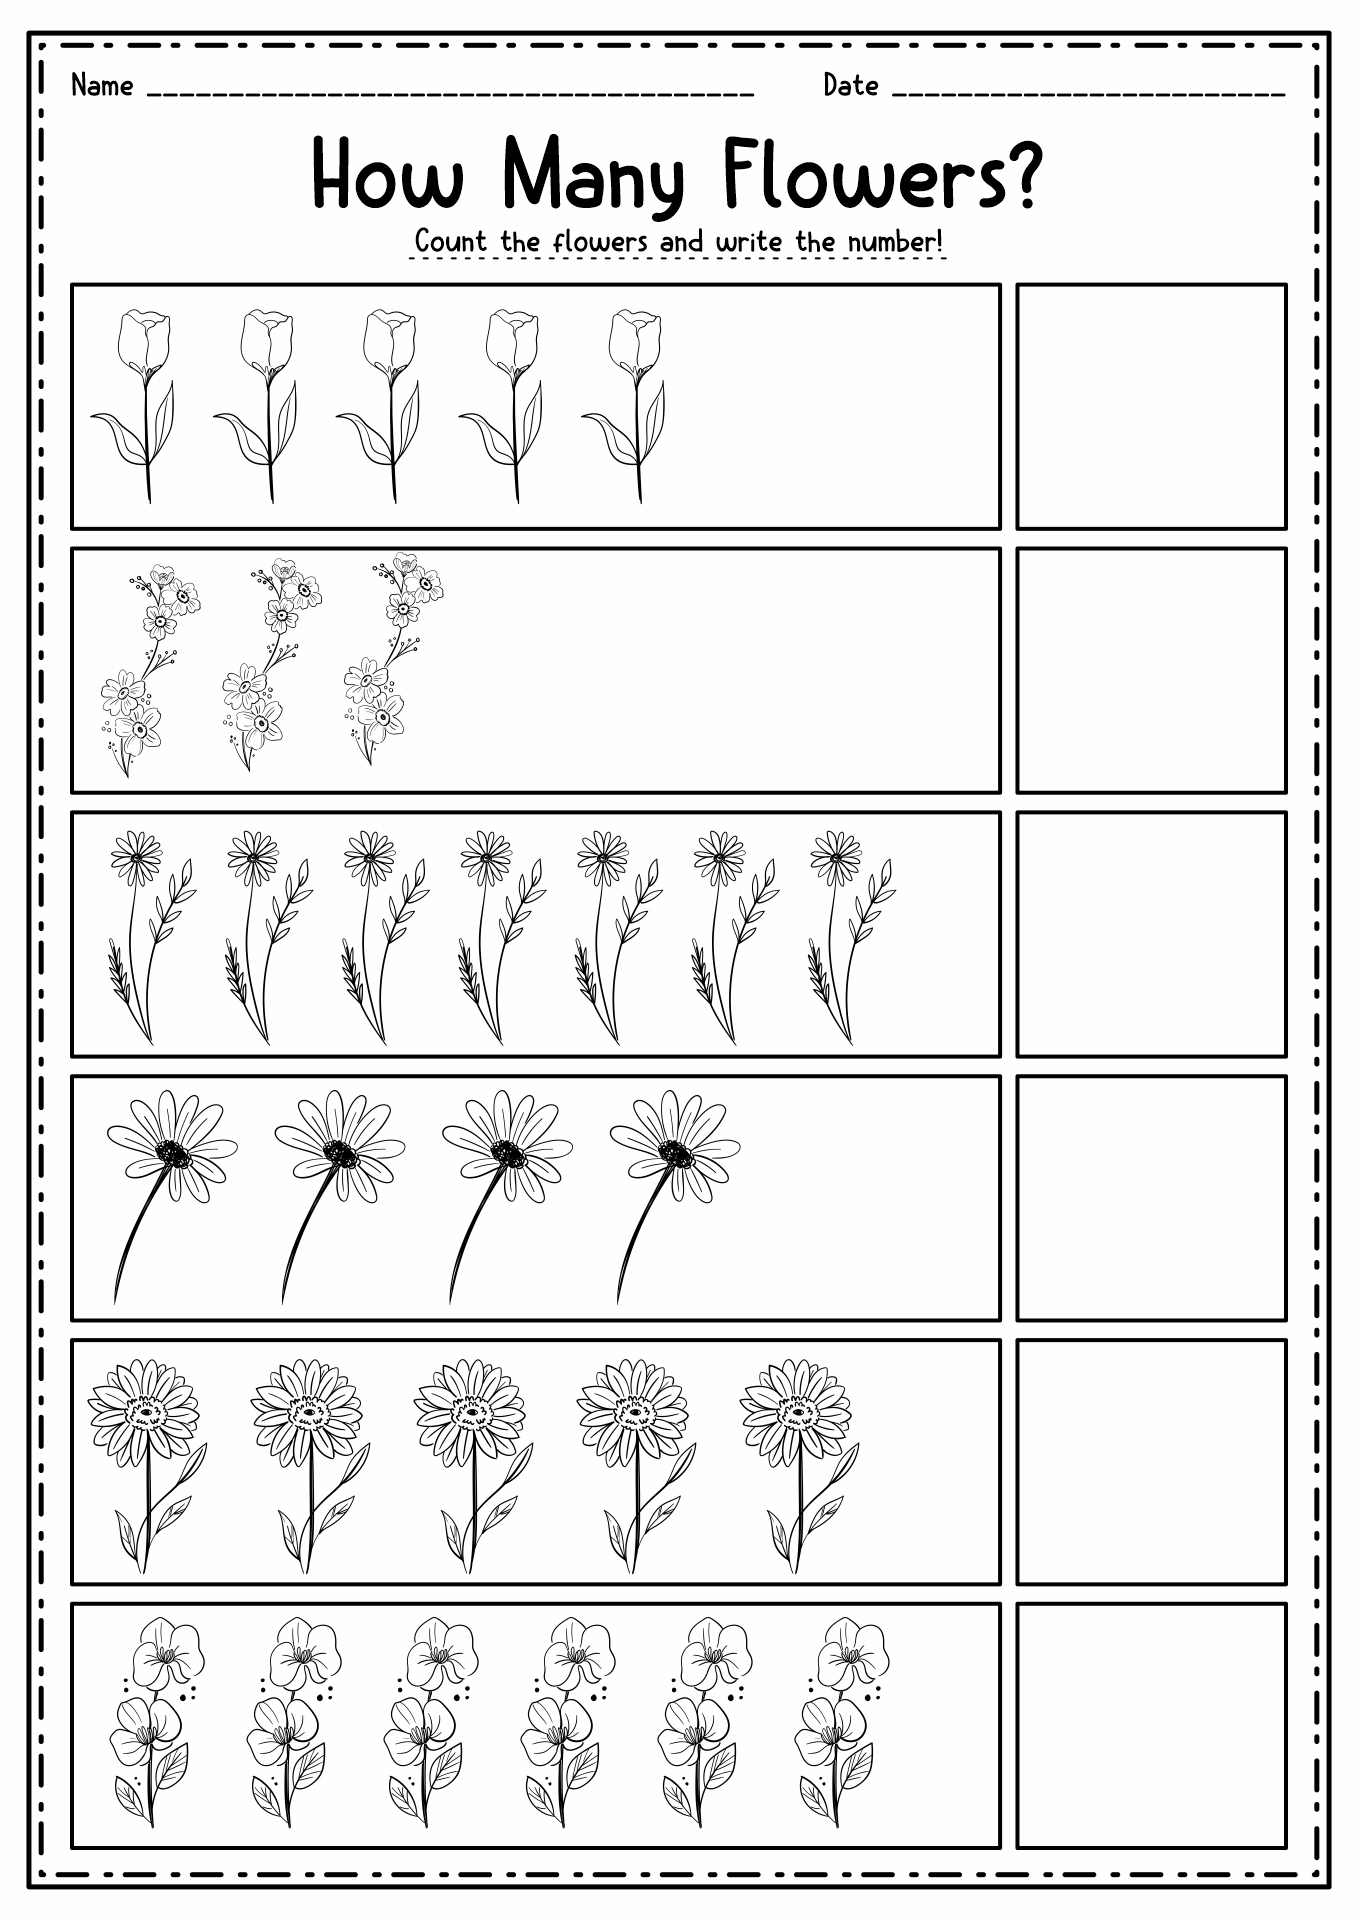 Free Printable Spring Worksheets Image